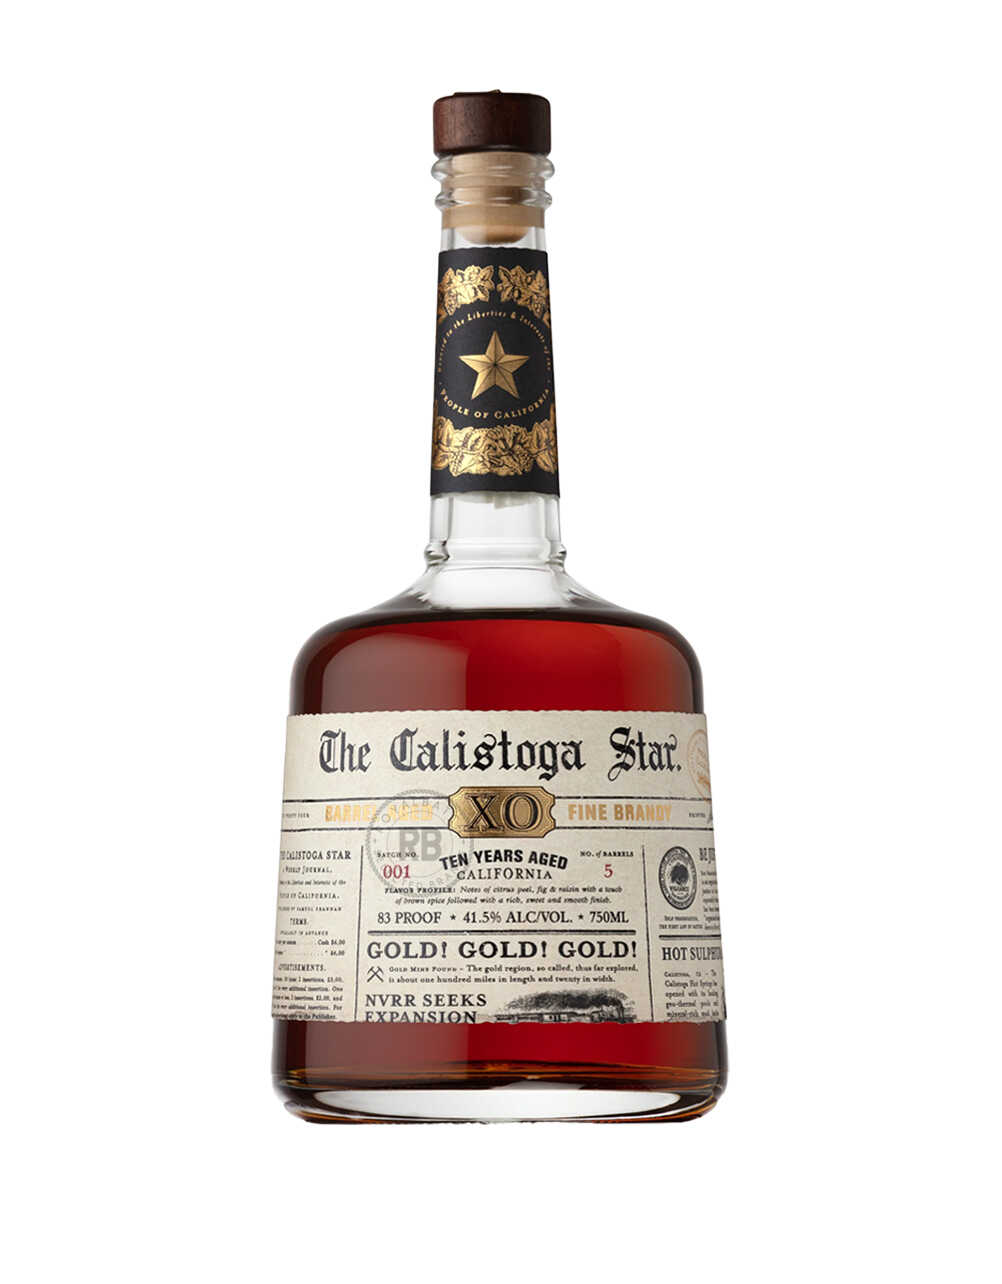 The Calistoga Star Barrel Aged XO Fine Brandy